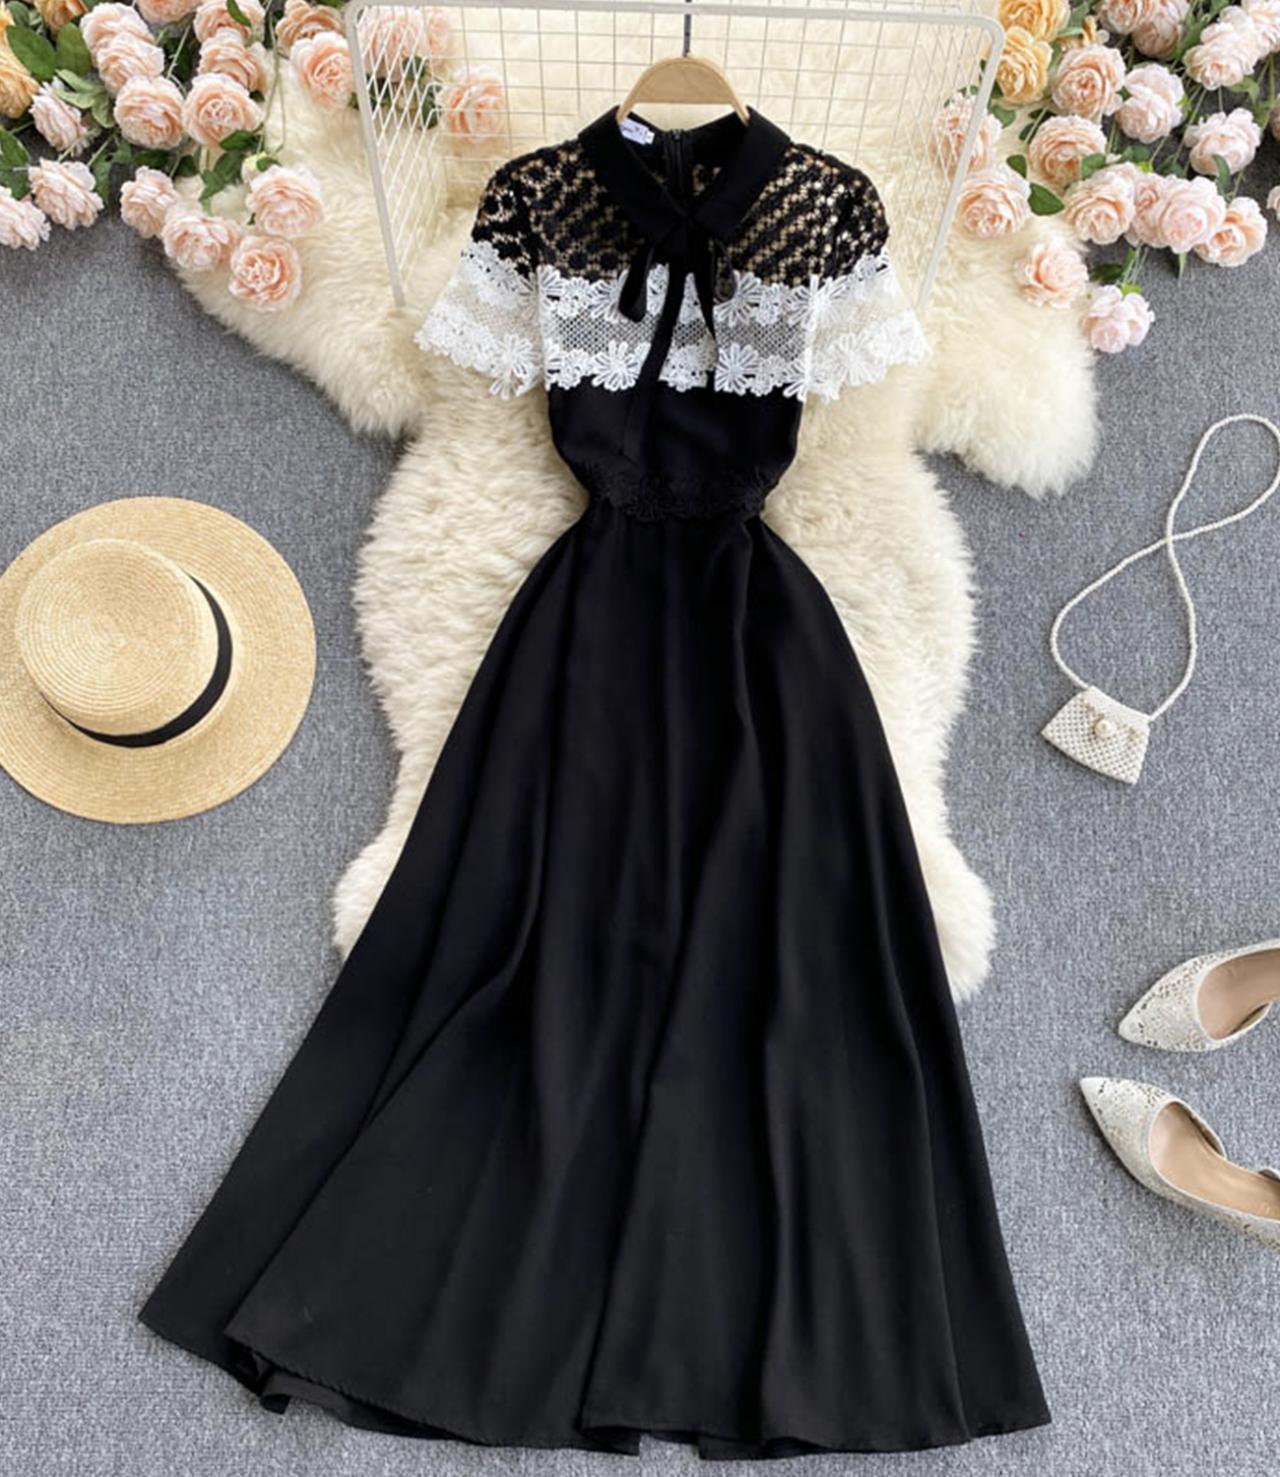 Cute lace short dress fashion dress